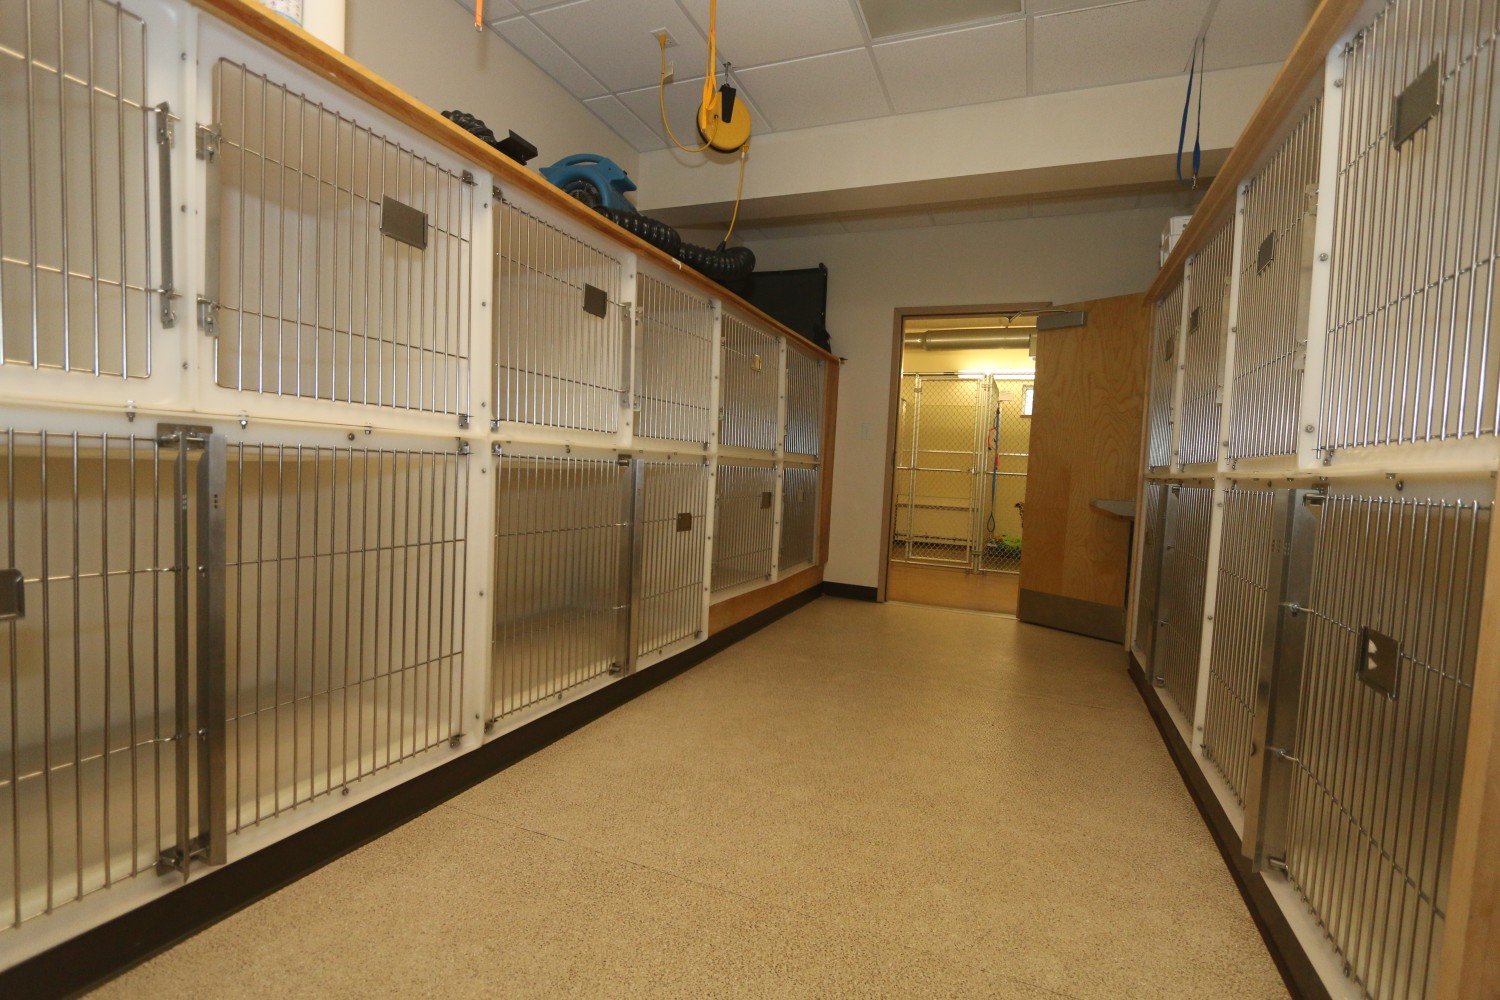 Litchfield Veterinary Hospital - Litchfield, CT - Small Dog Ward